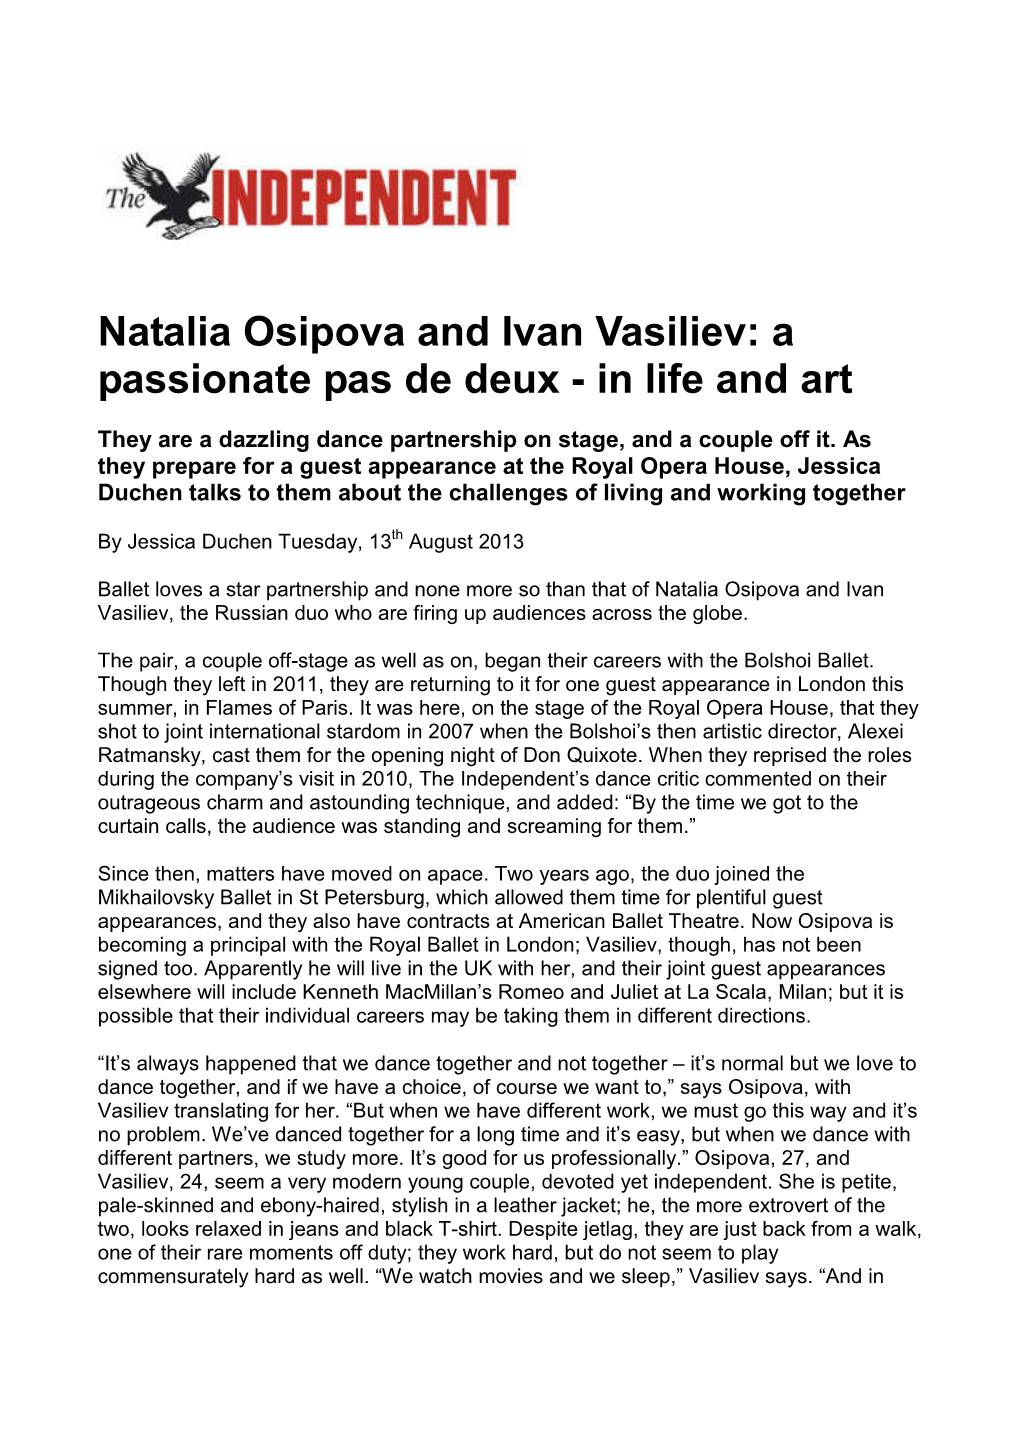 Natalia Osipova and Ivan Vasiliev: a Passionate Pas De Deux - in Life and Art